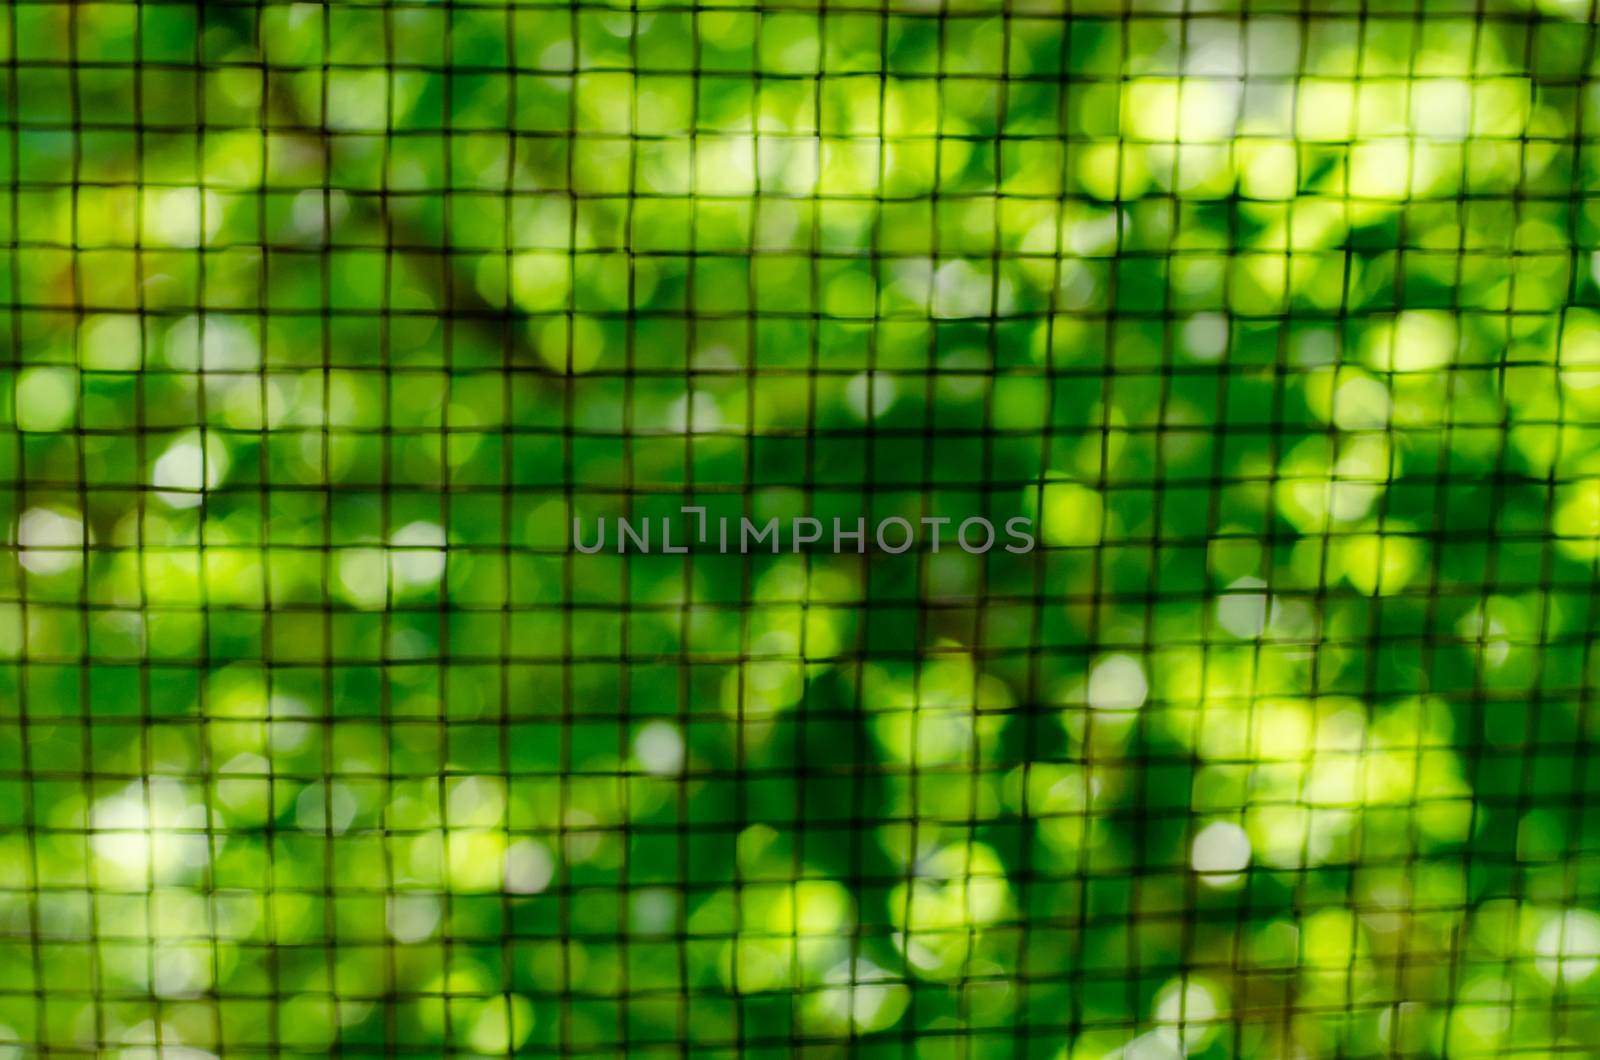 Green vegetative background through a metal lattice. Blur